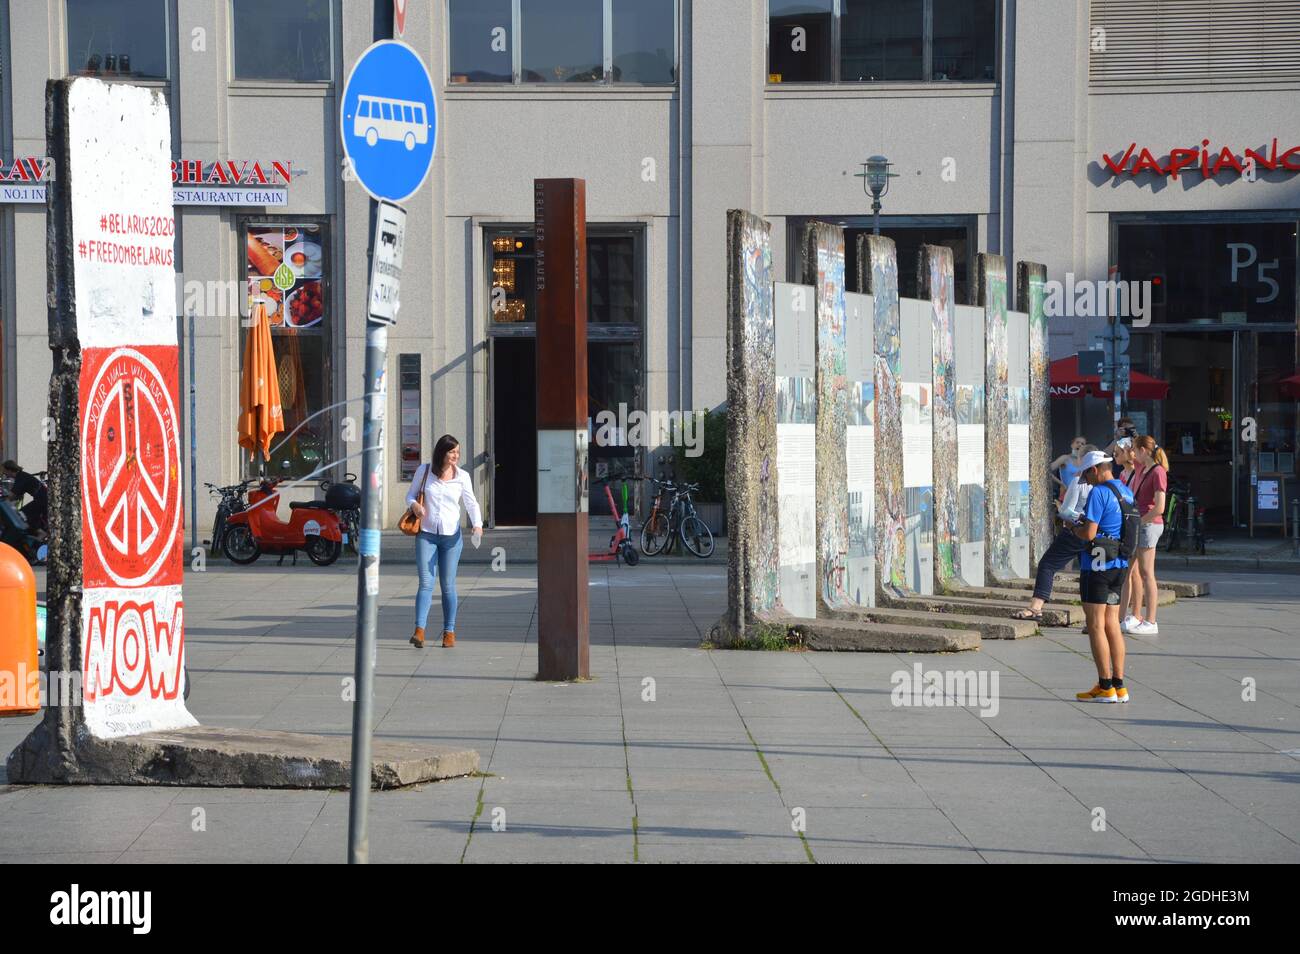 60th anniversary of Berlin Wall construction - Potsdamer Platz, Berlin, Germany - August 13, 2021. Stock Photo